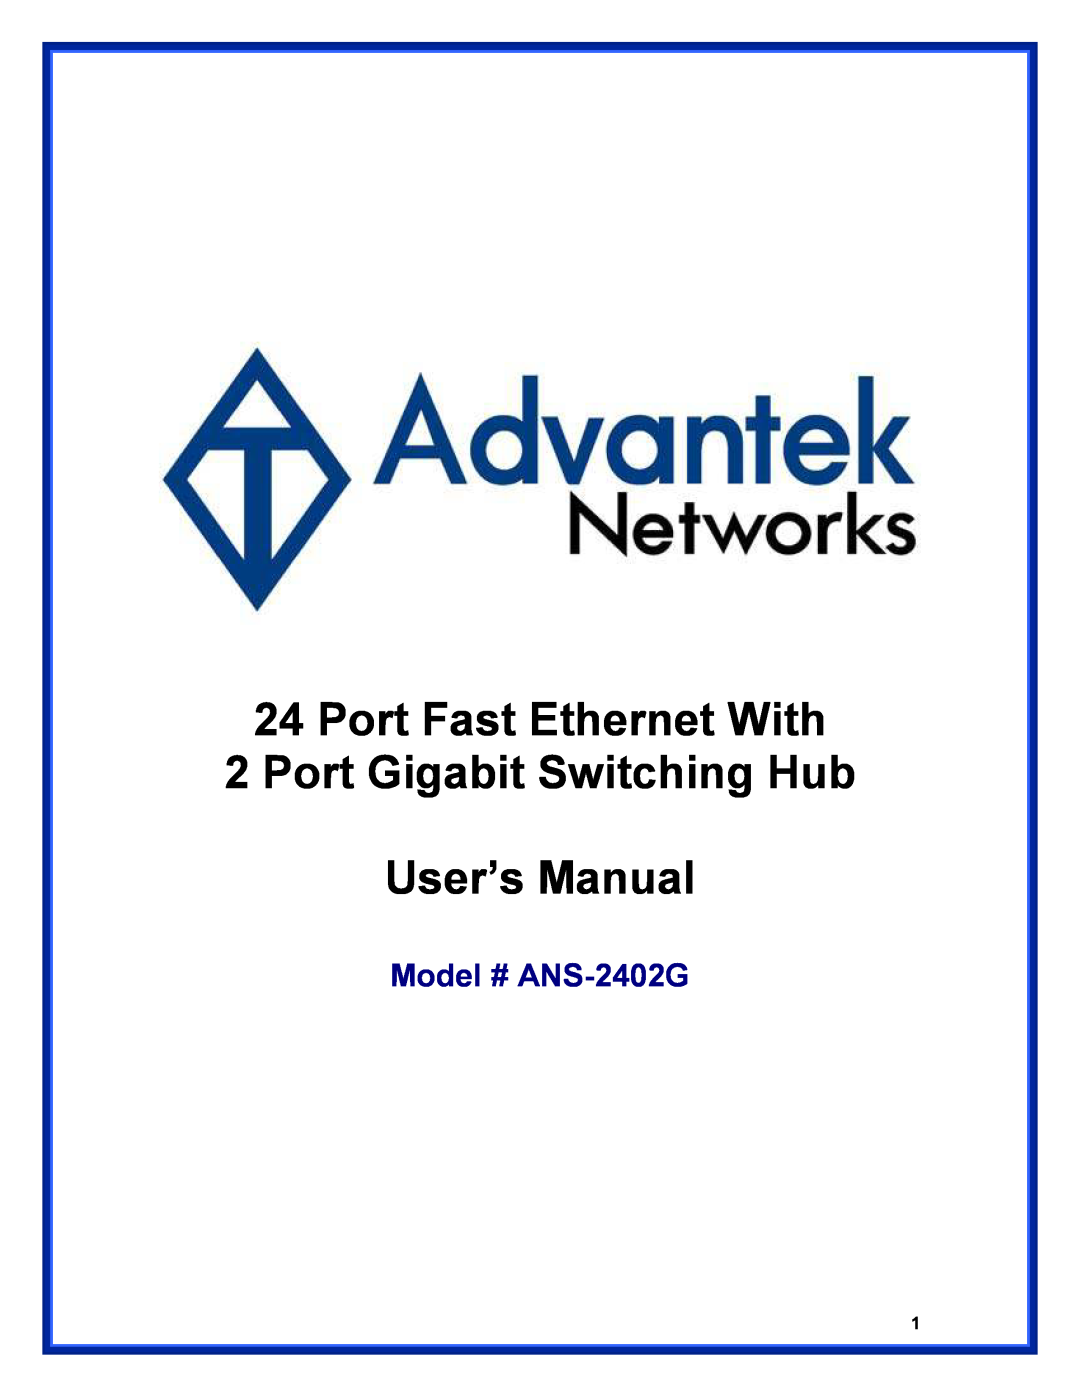 Advantek Networks ANS-2402G user manual Port Fast Ethernet With 2 Port Gigabit Switching Hub User’s Manual 